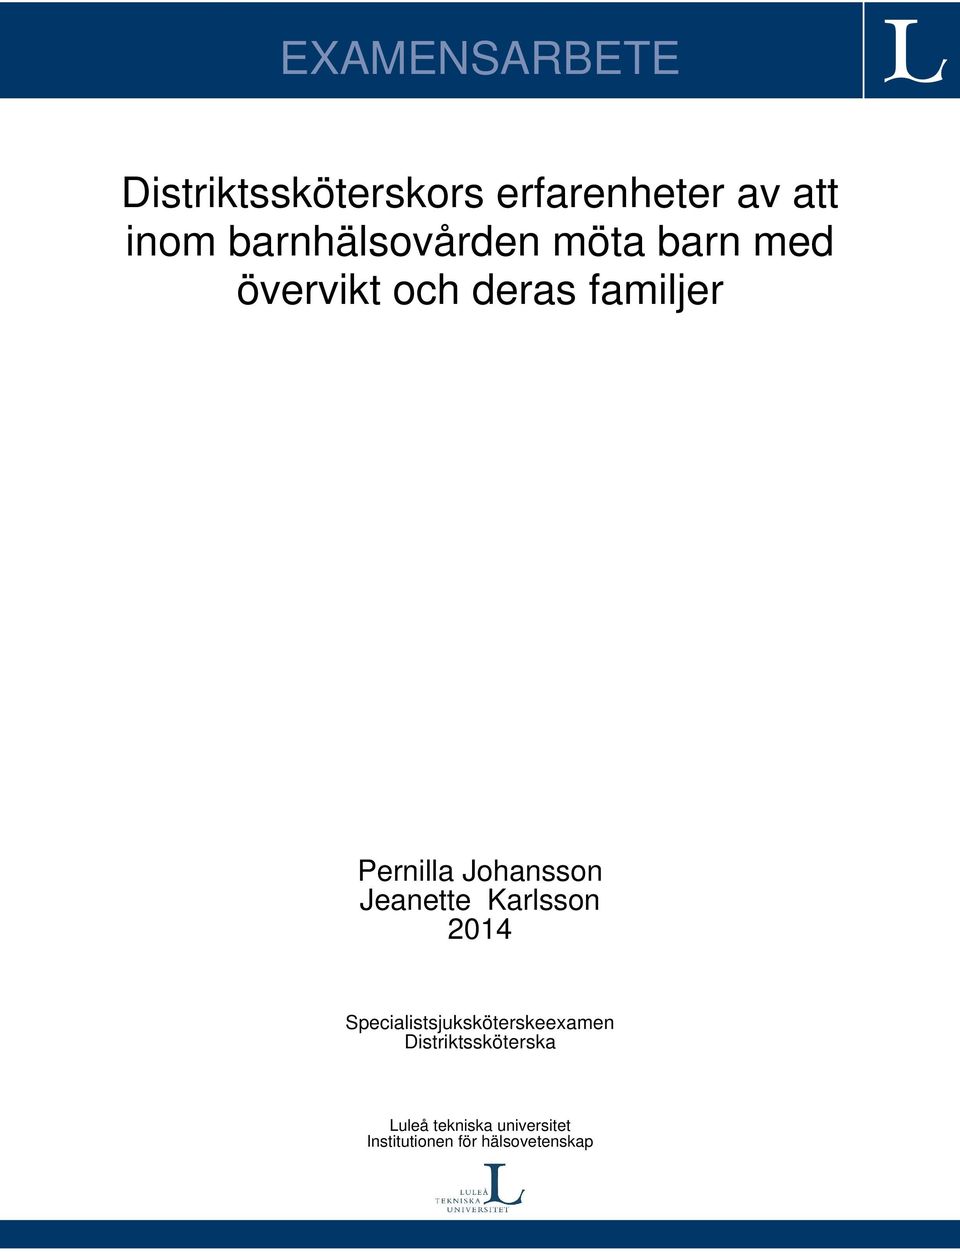 Johansson Jeanette Karlsson 2014 Specialistsjuksköterskeexamen